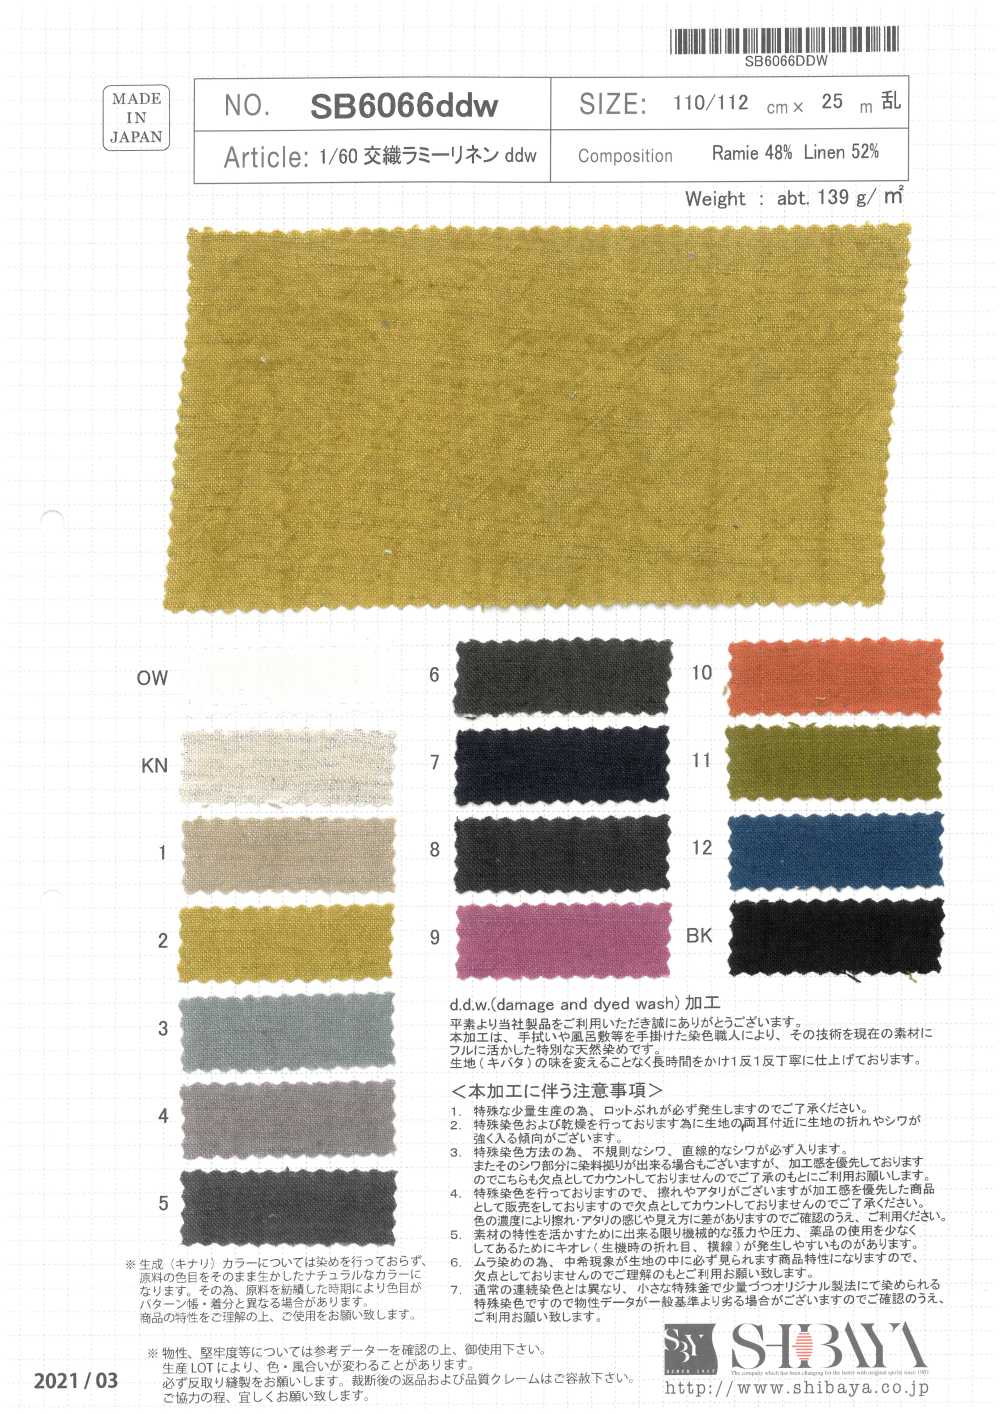 SB6066ddw 1/60 Mixed Weave Ramie Linen Ddw[Fabrication De Textile] SHIBAYA